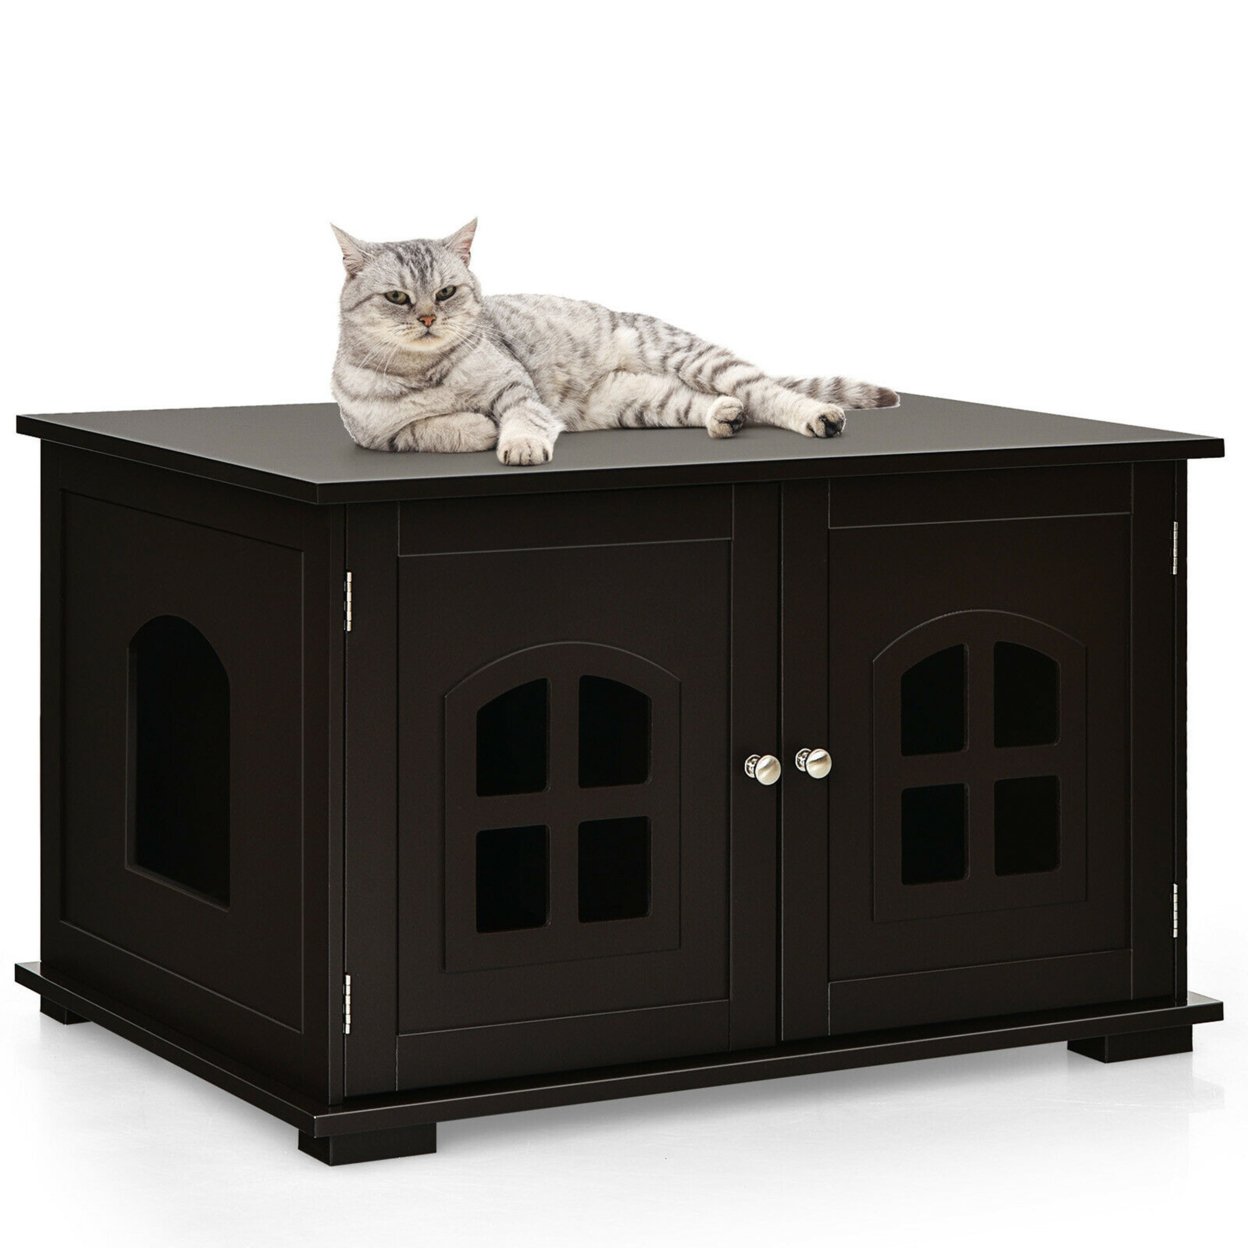 Large Wooden Cat Litter Box Enclosure Hidden Cat Washroom W/ Divider - Coffee